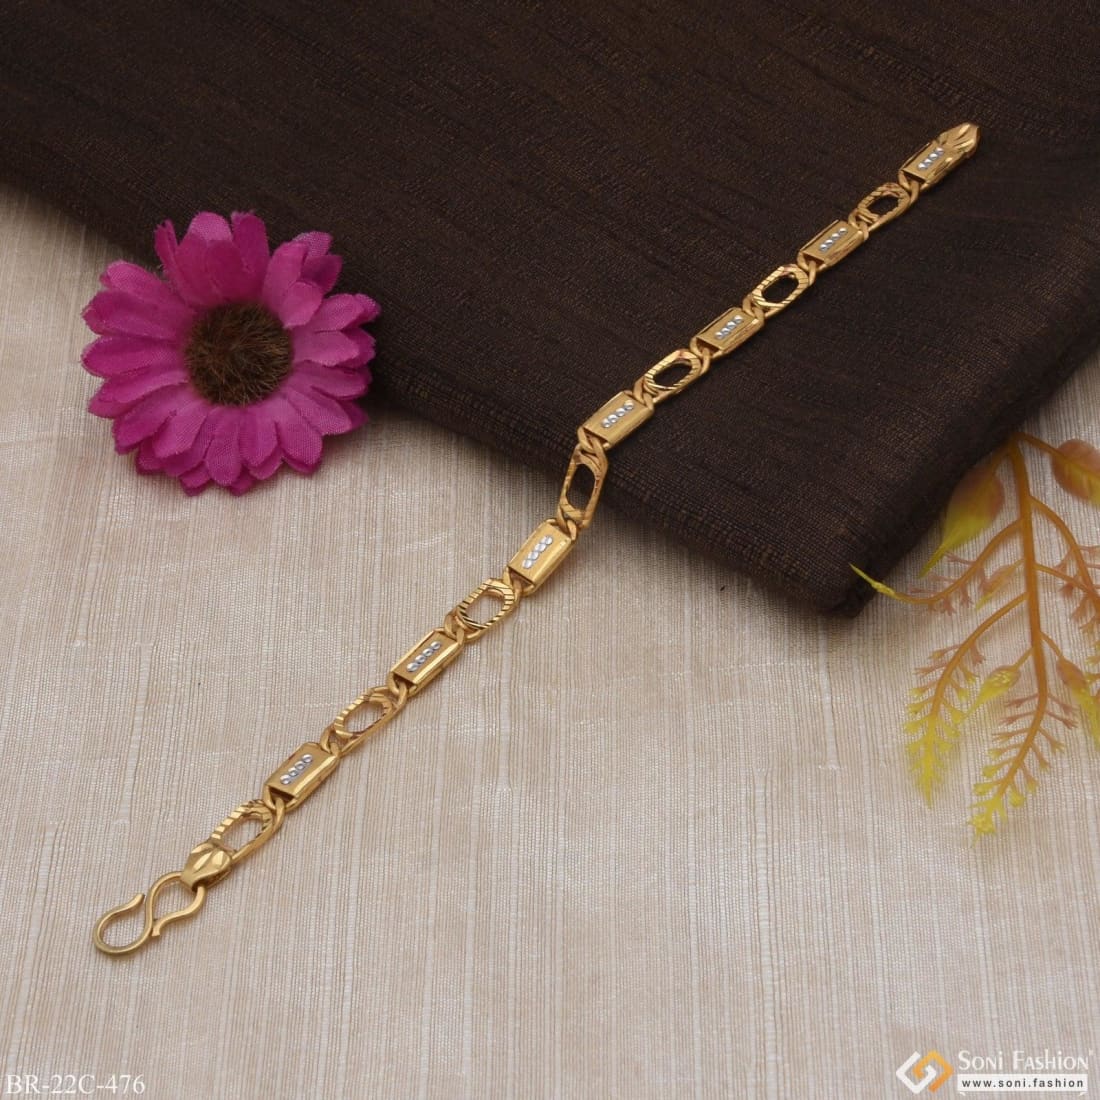 Cuban Curb Link Chain Bracelet 14K Solid Gold Women Minimalist Stacking  Bracelet | eBay